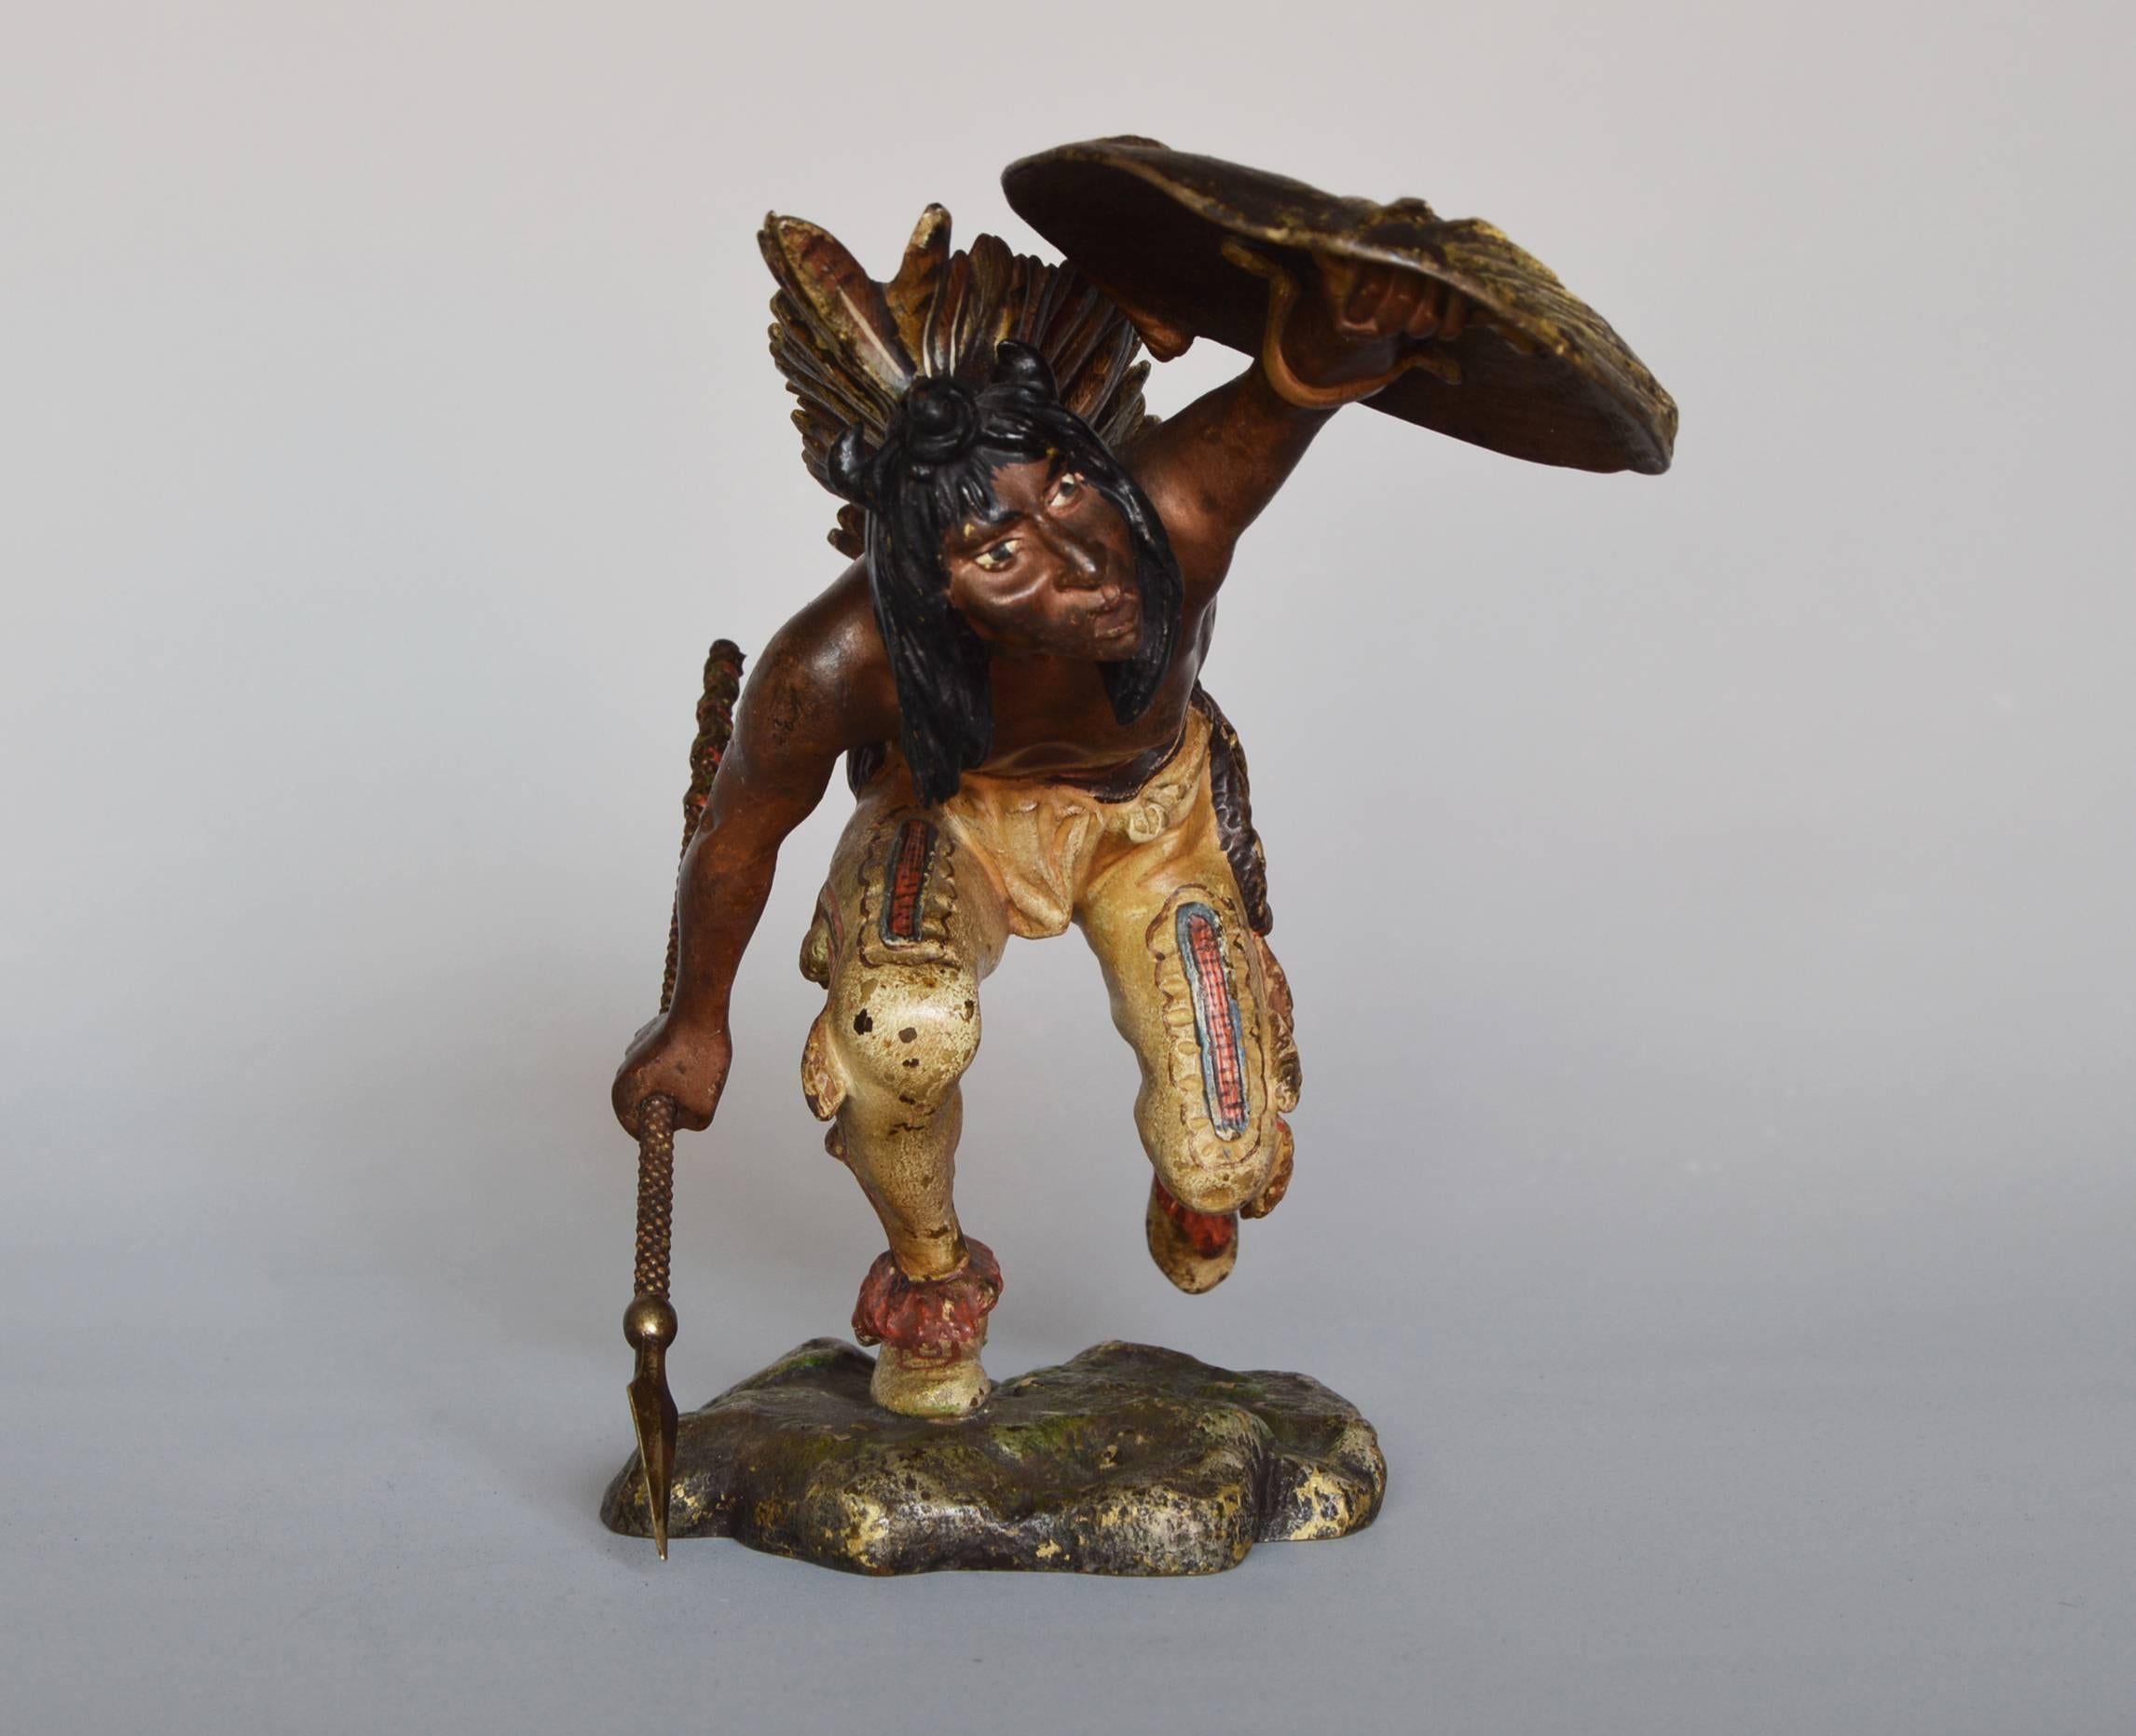 Franz Bergmann Figurative Sculpture - Native American Indian Crouching, bronze sculpture